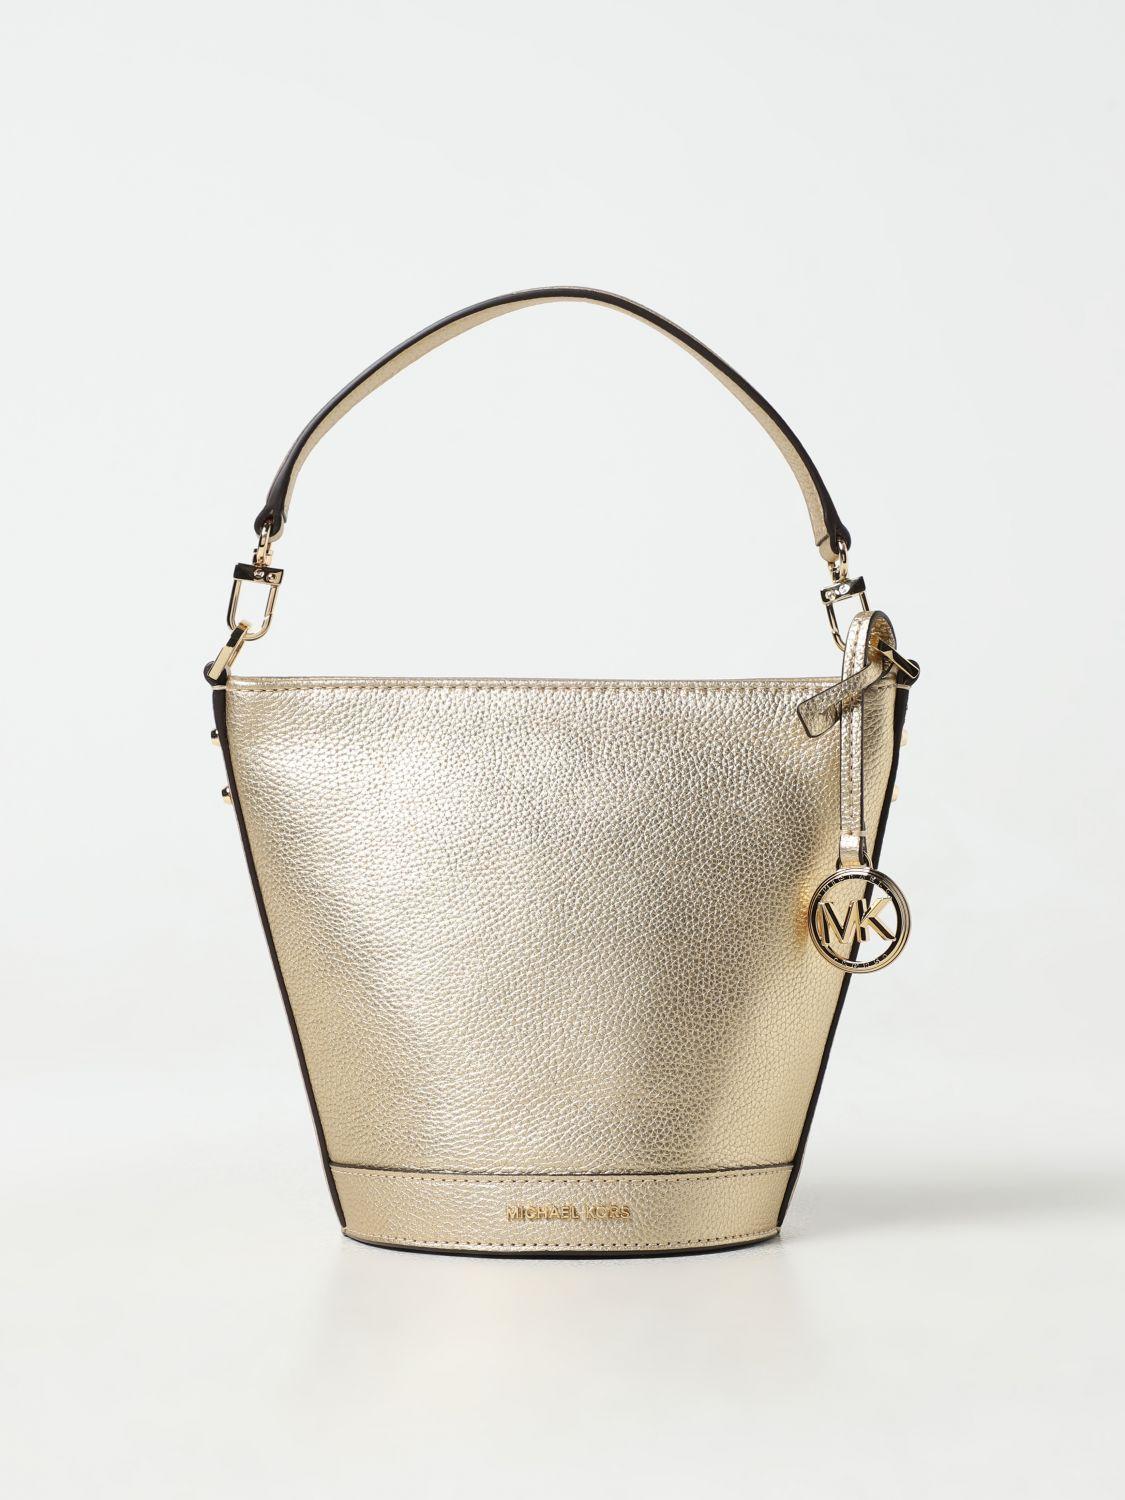 Michael Kors Astrid Women's Python Leather Shoulder Handbag Bag Purse |  Leather shoulder handbags, Michael kors handbags sale, Michael kors bags  sale